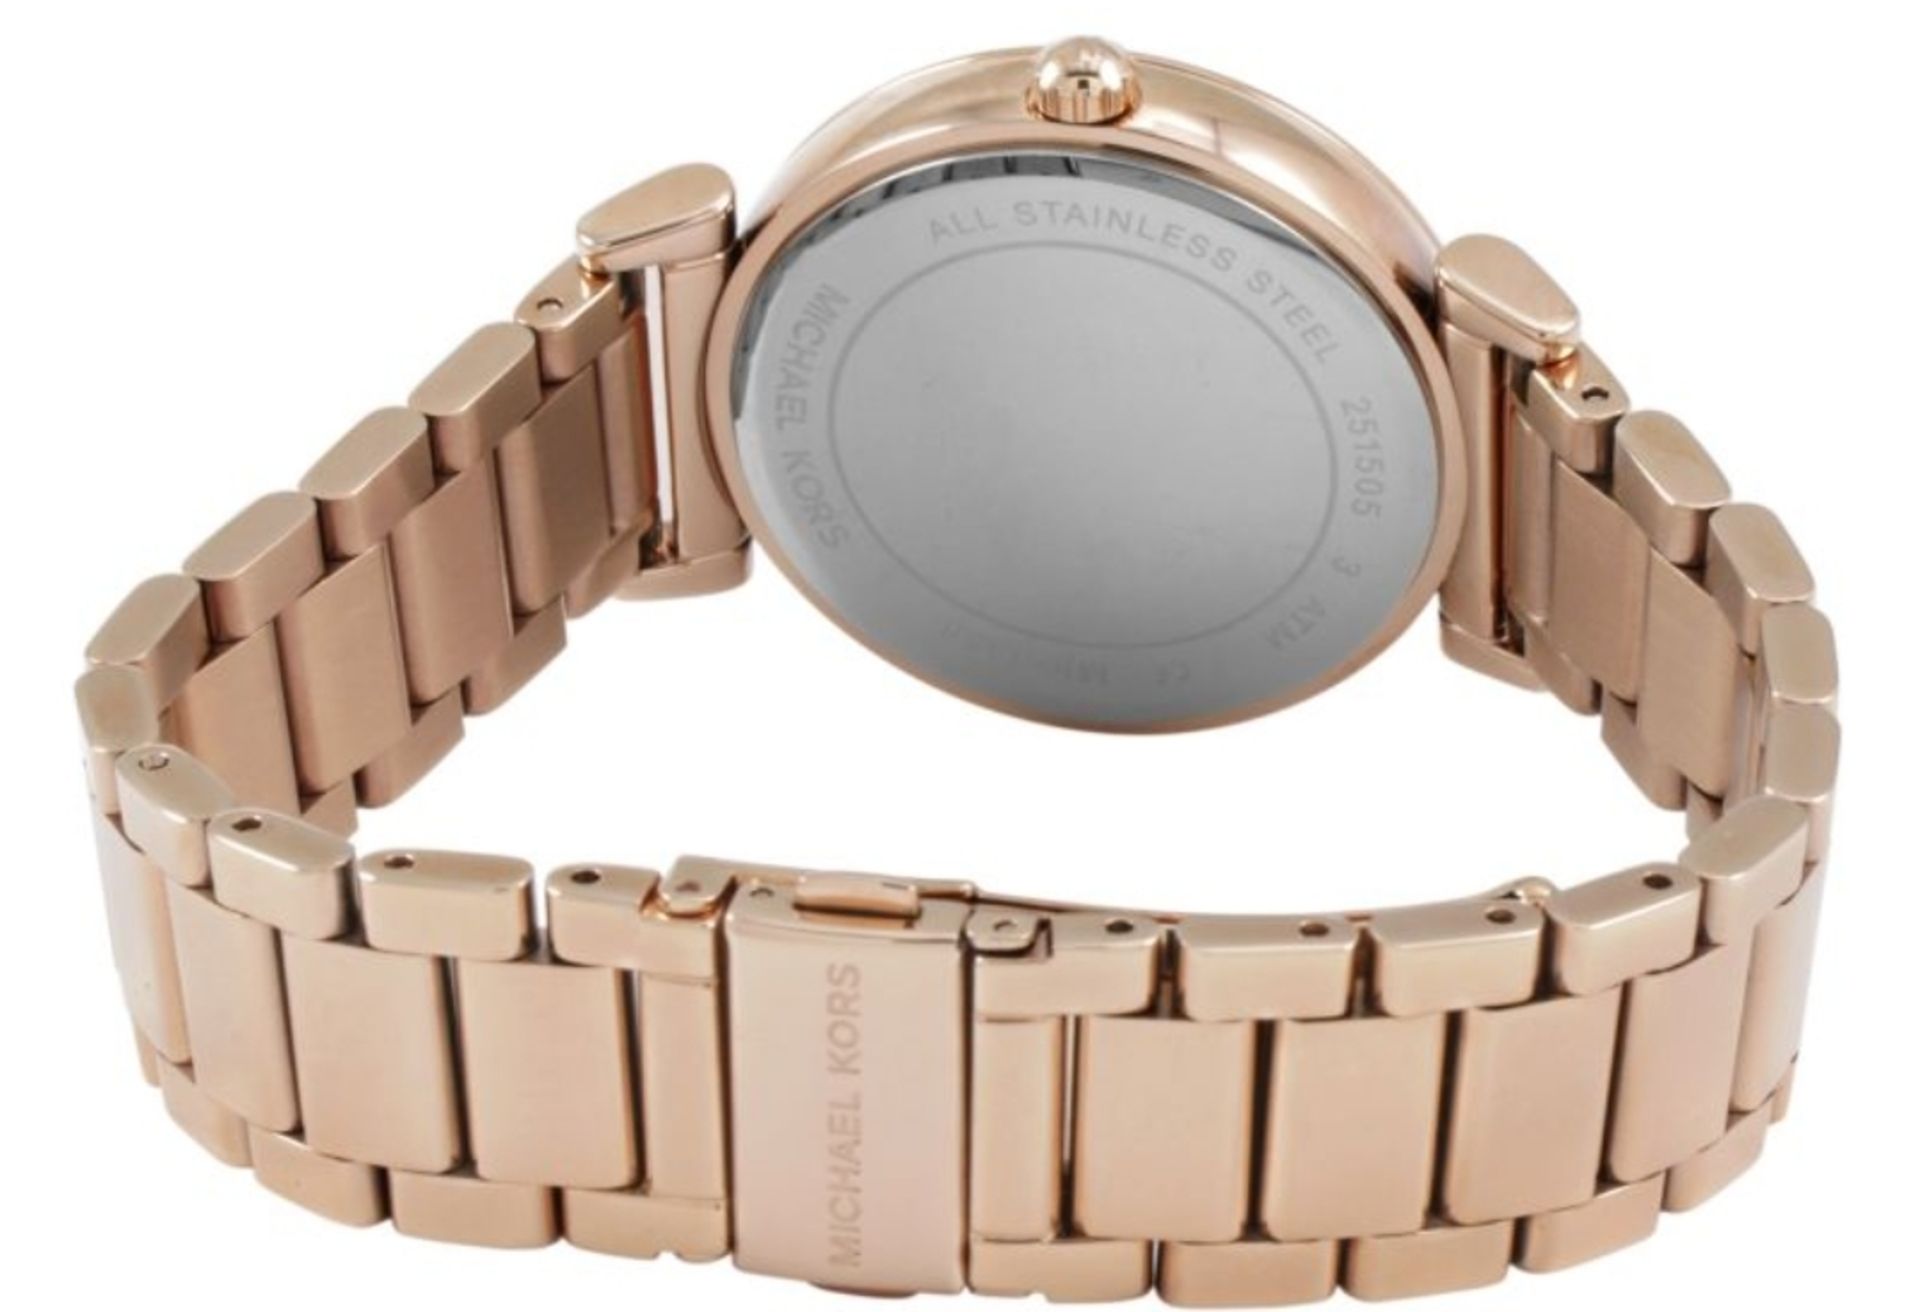 Michael Kors MK3356 Ladies Catlin Rose Gold Quartz Watch - Image 5 of 7